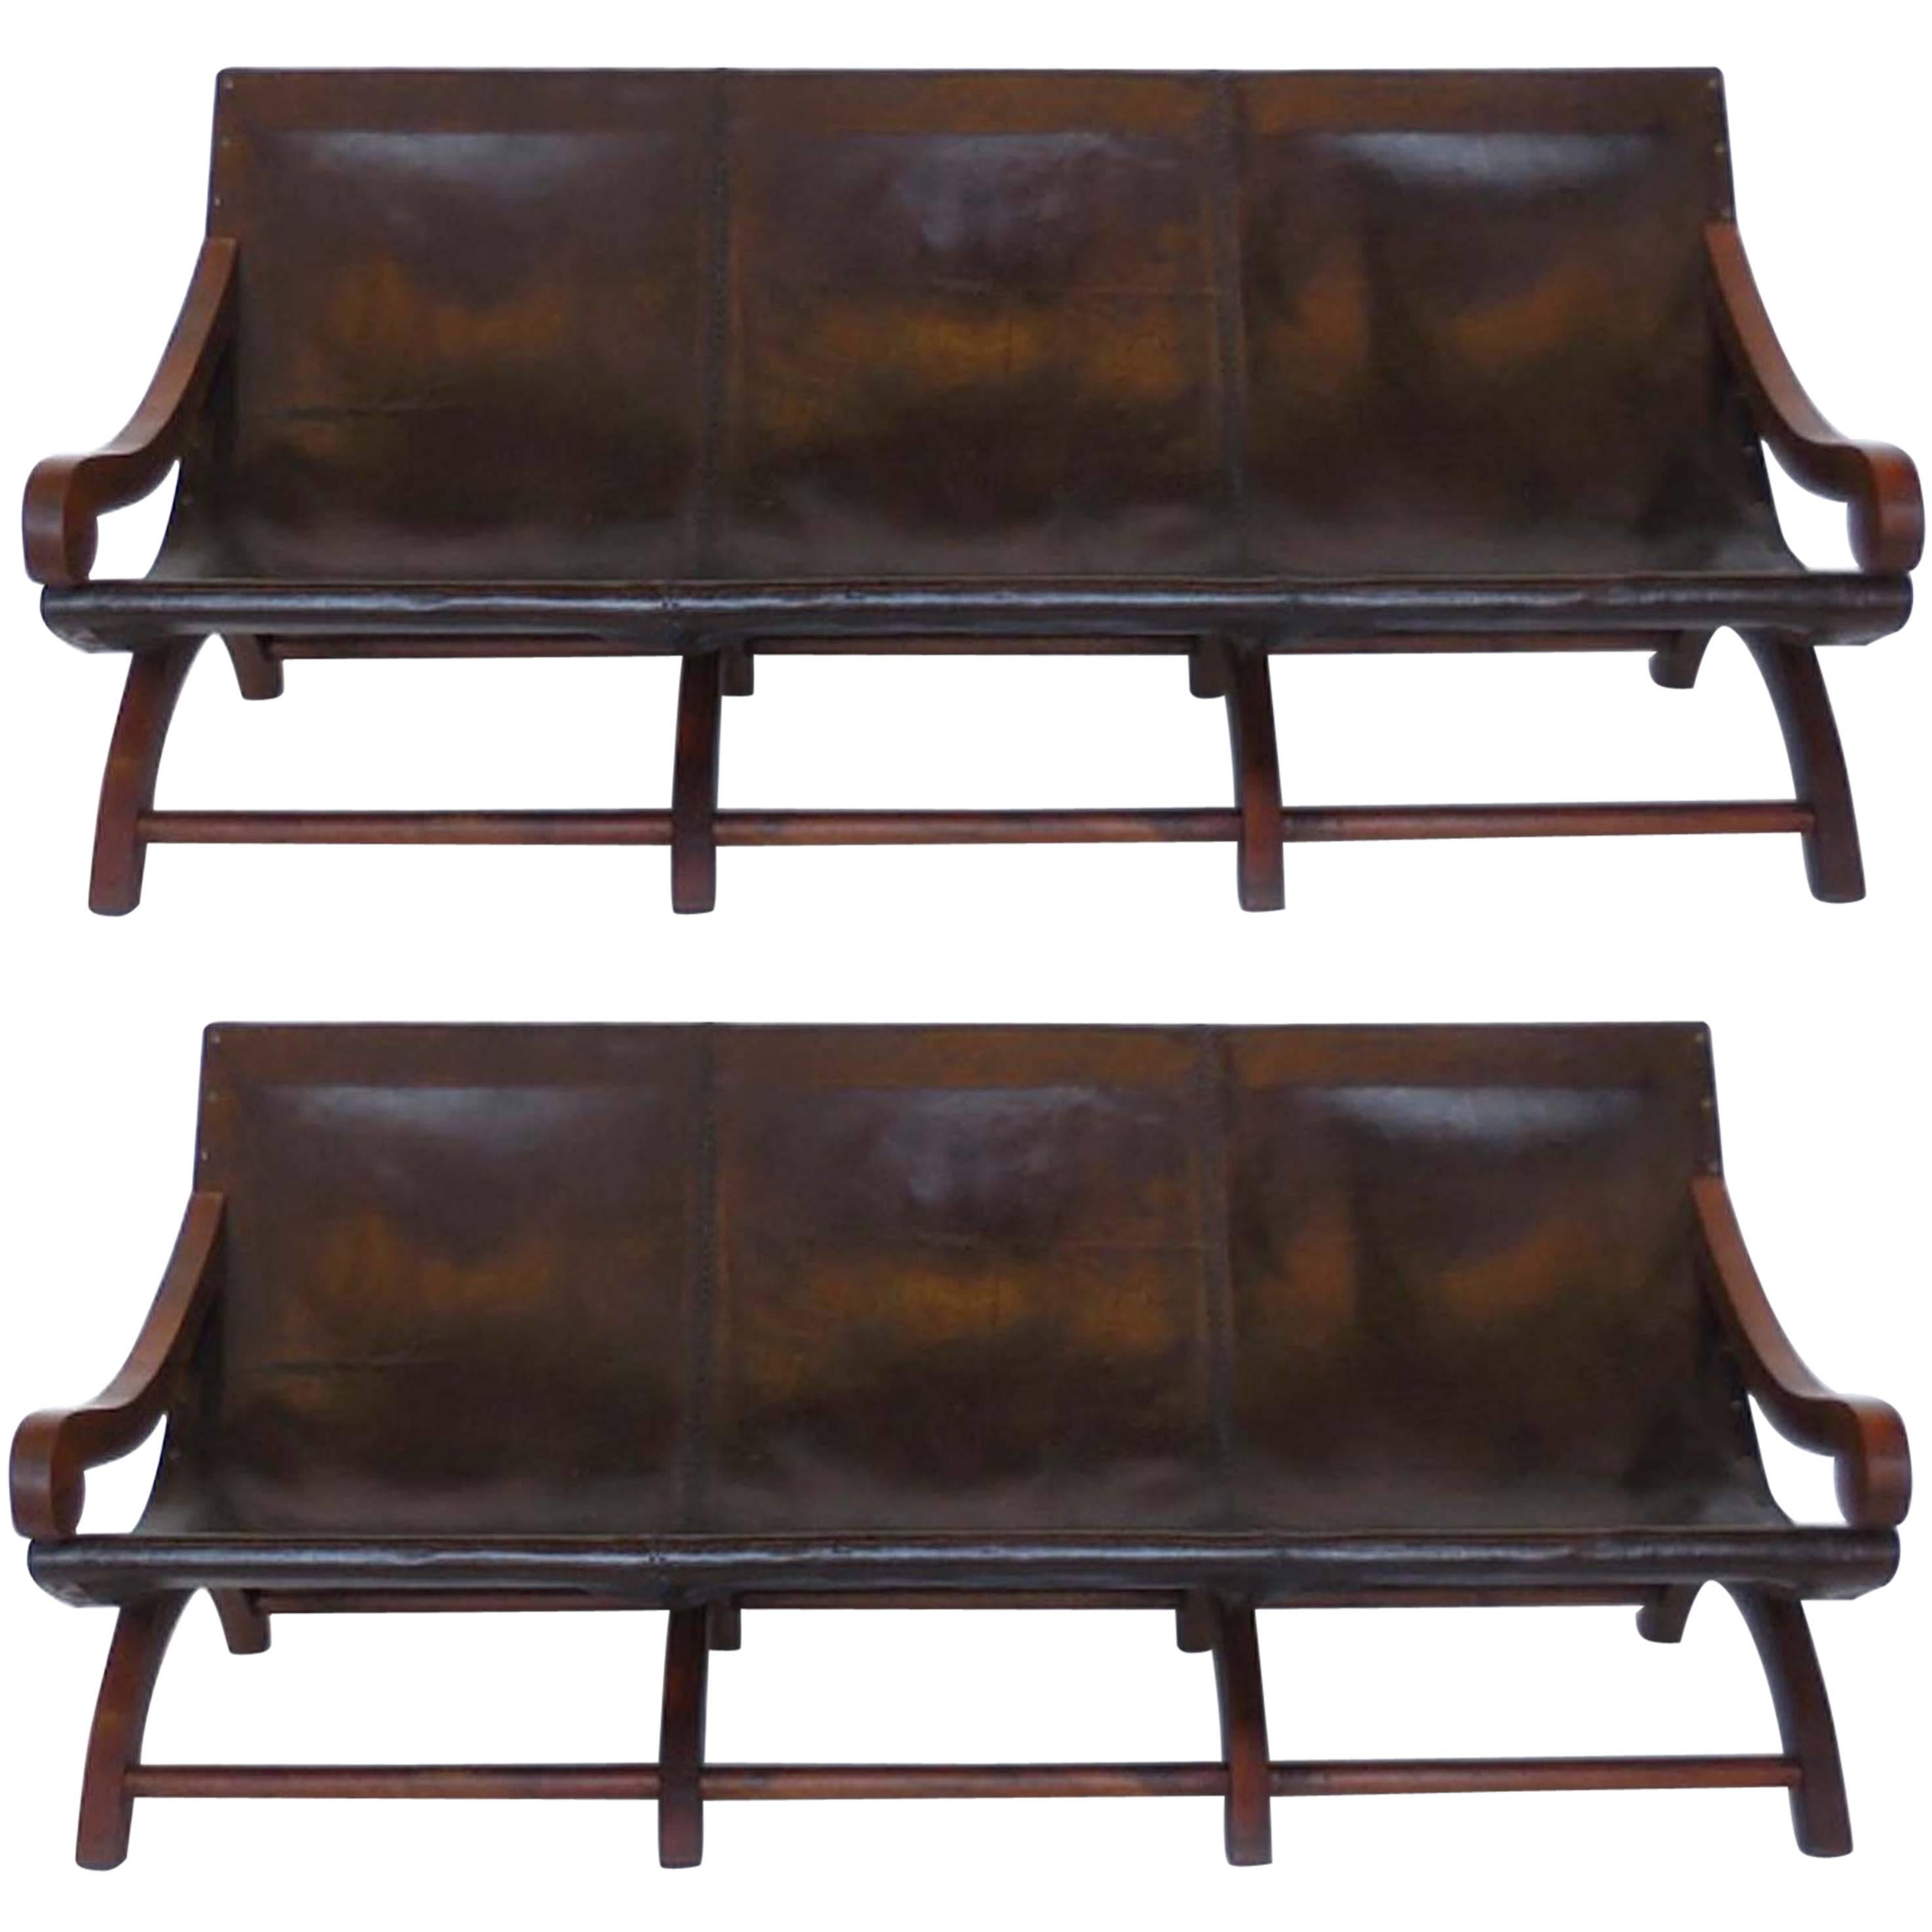 Leather Butaca Sofa - ONE AVAILABLE